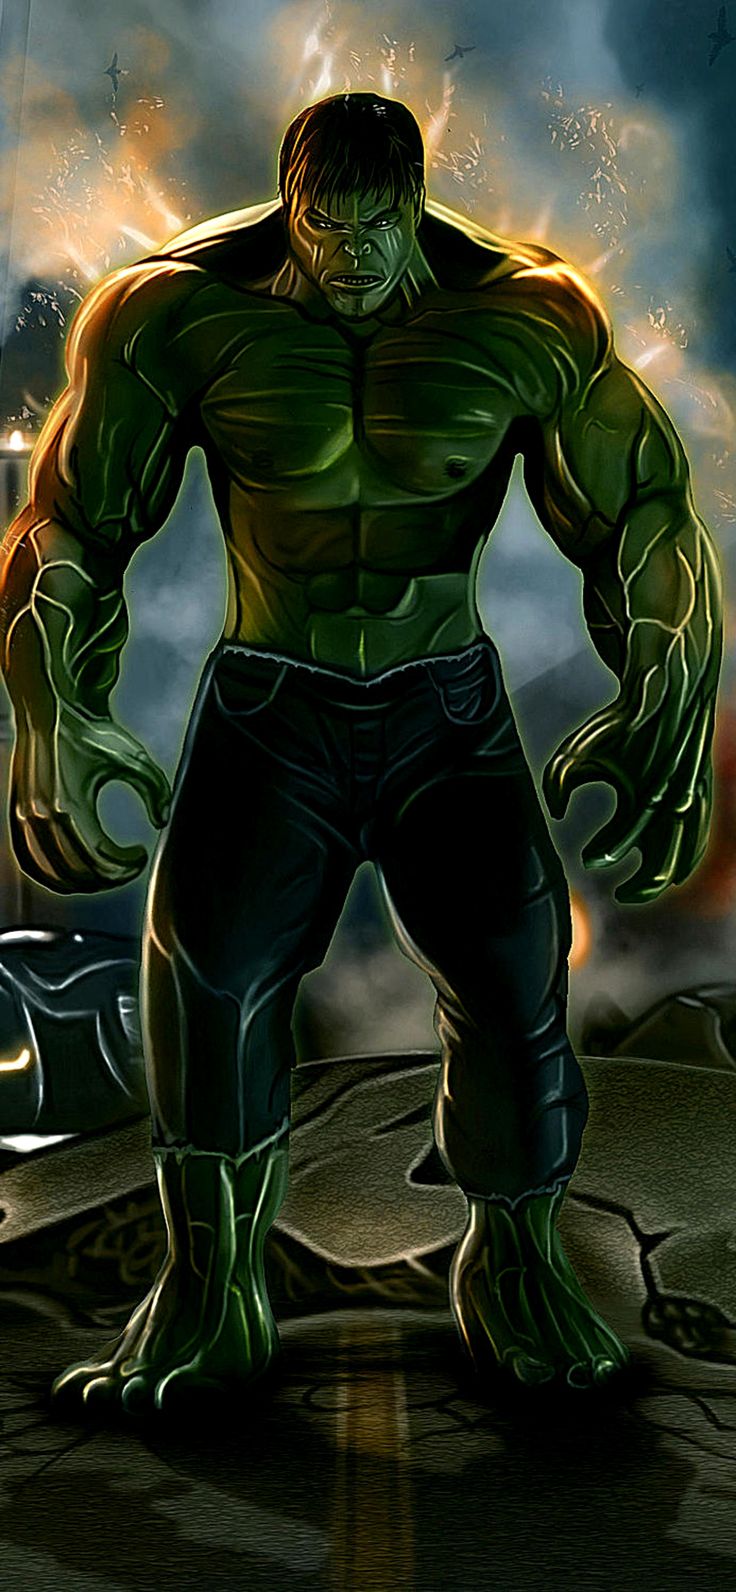 Hulk Wallpaper 4K iPhone Ideas. Hulk avengers, Marvel superhero posters, Hulk marvel